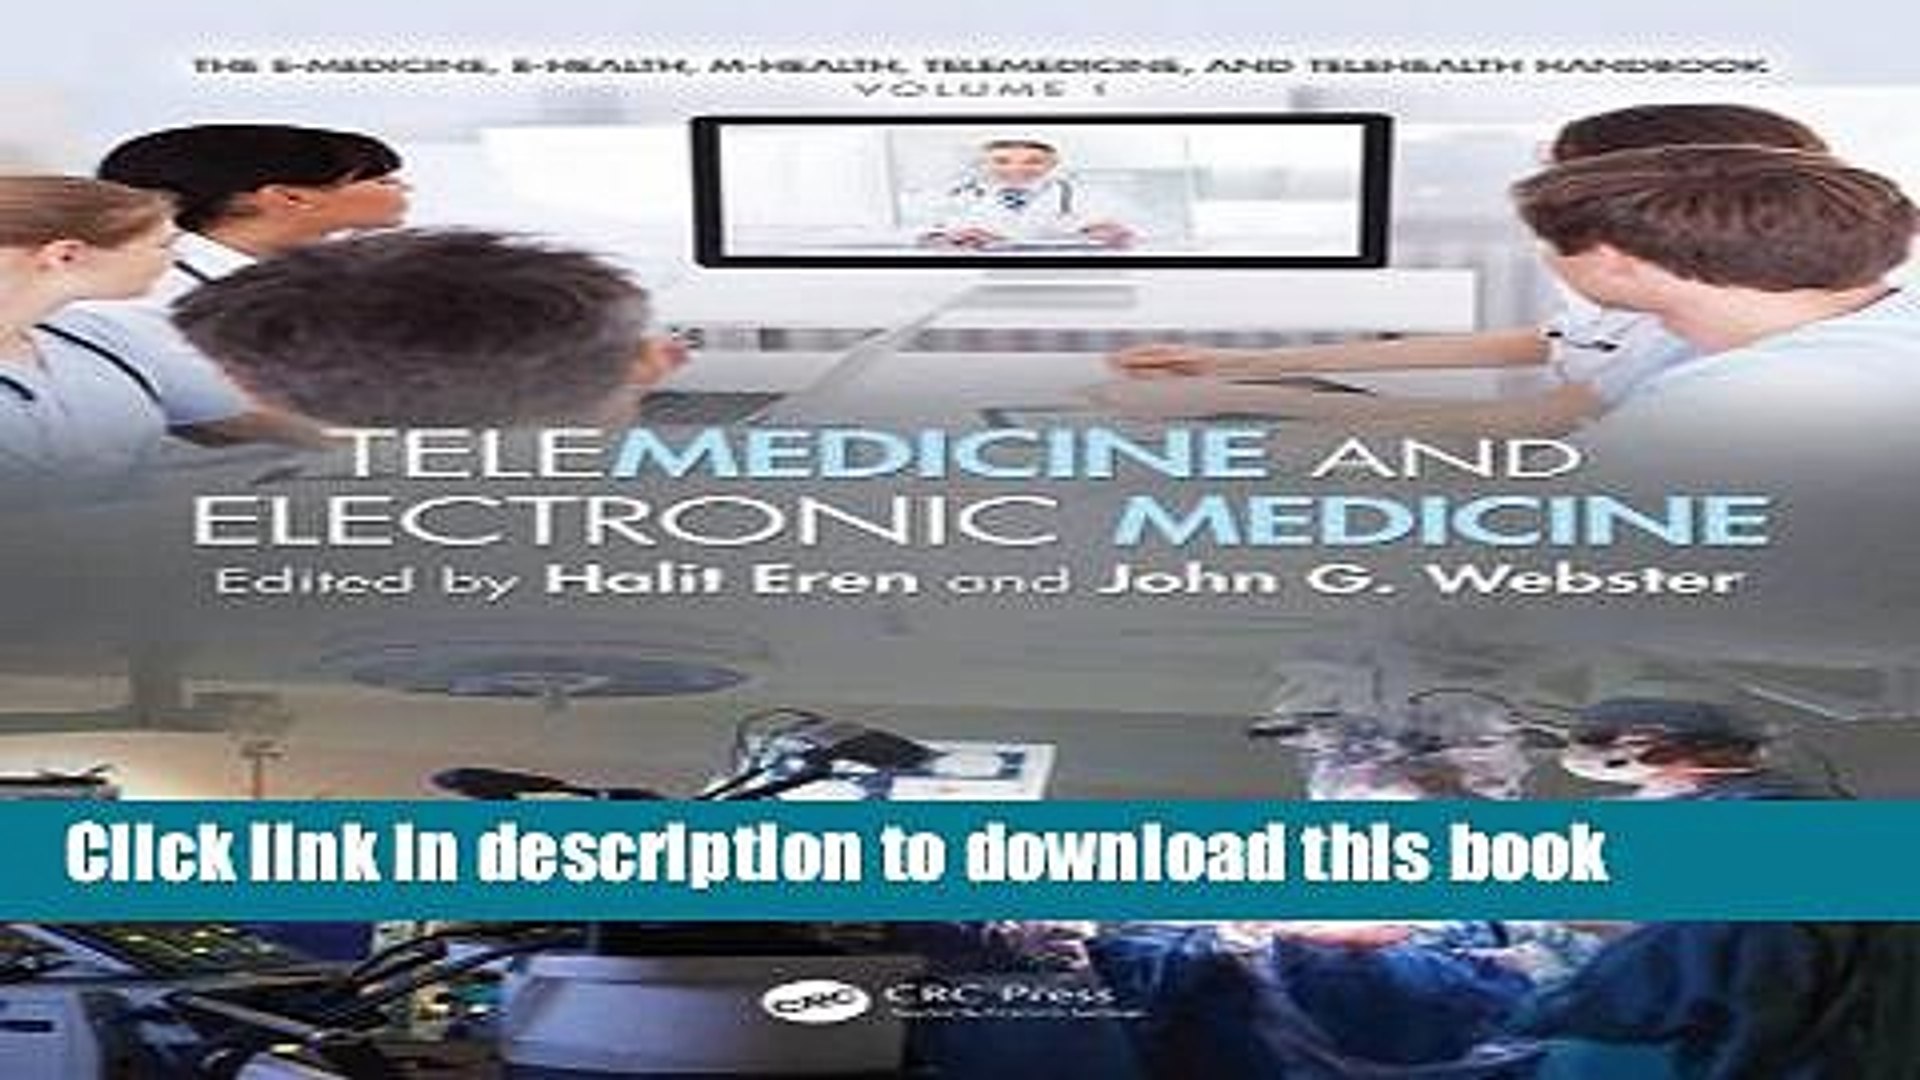 Books Telemedicine and Electronic Medicine (E-Medicine, E-Health, M-Health, Telemedicine, and